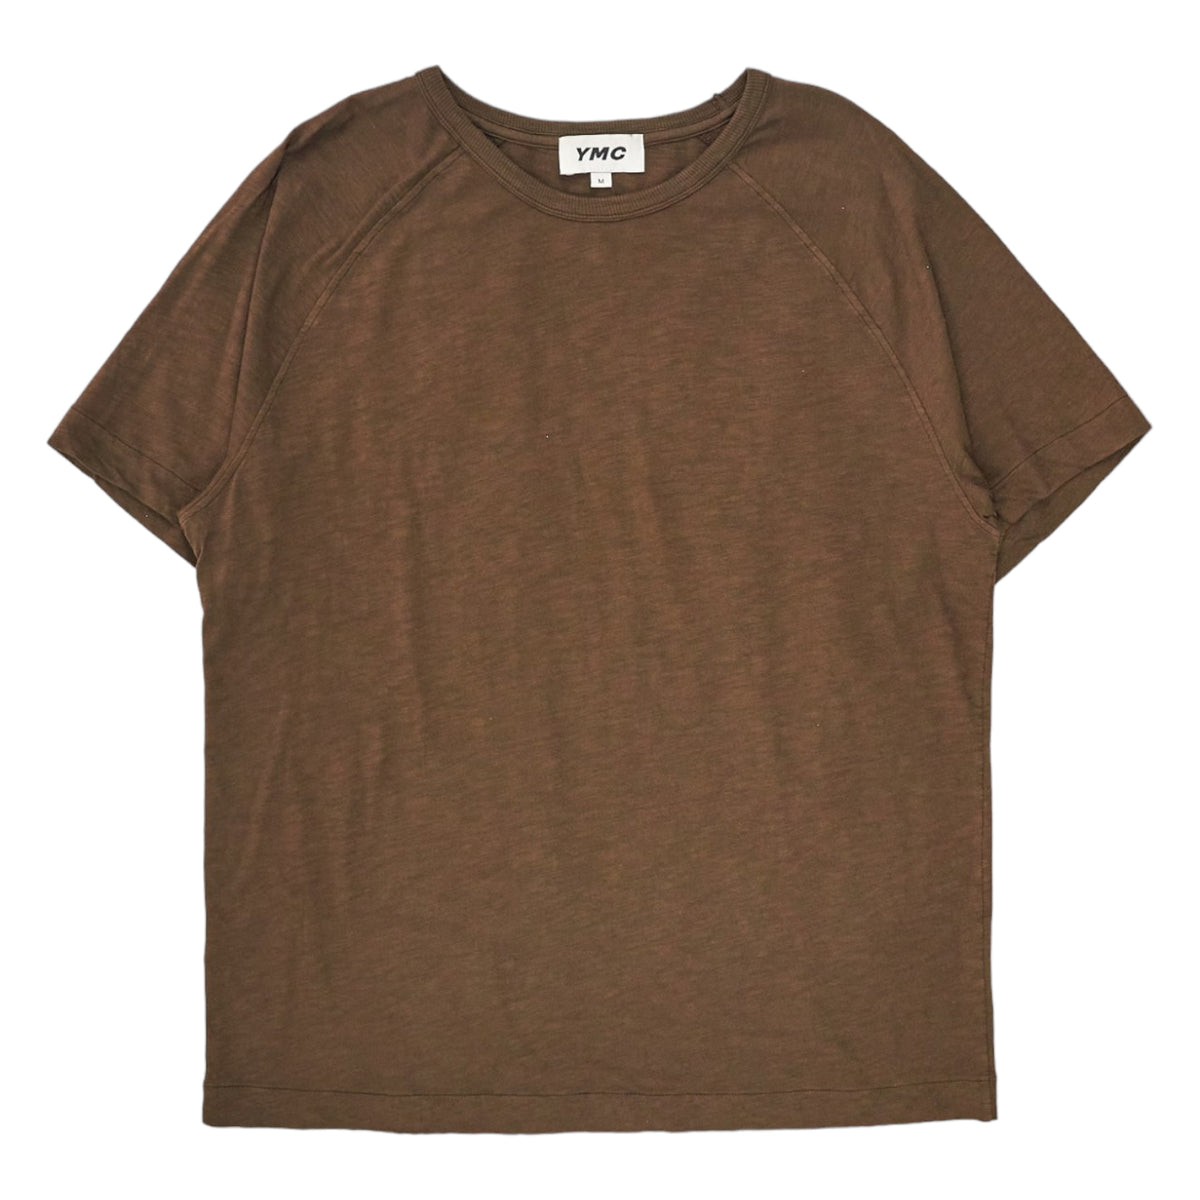 YMC Chocolate Raglan T Shirt